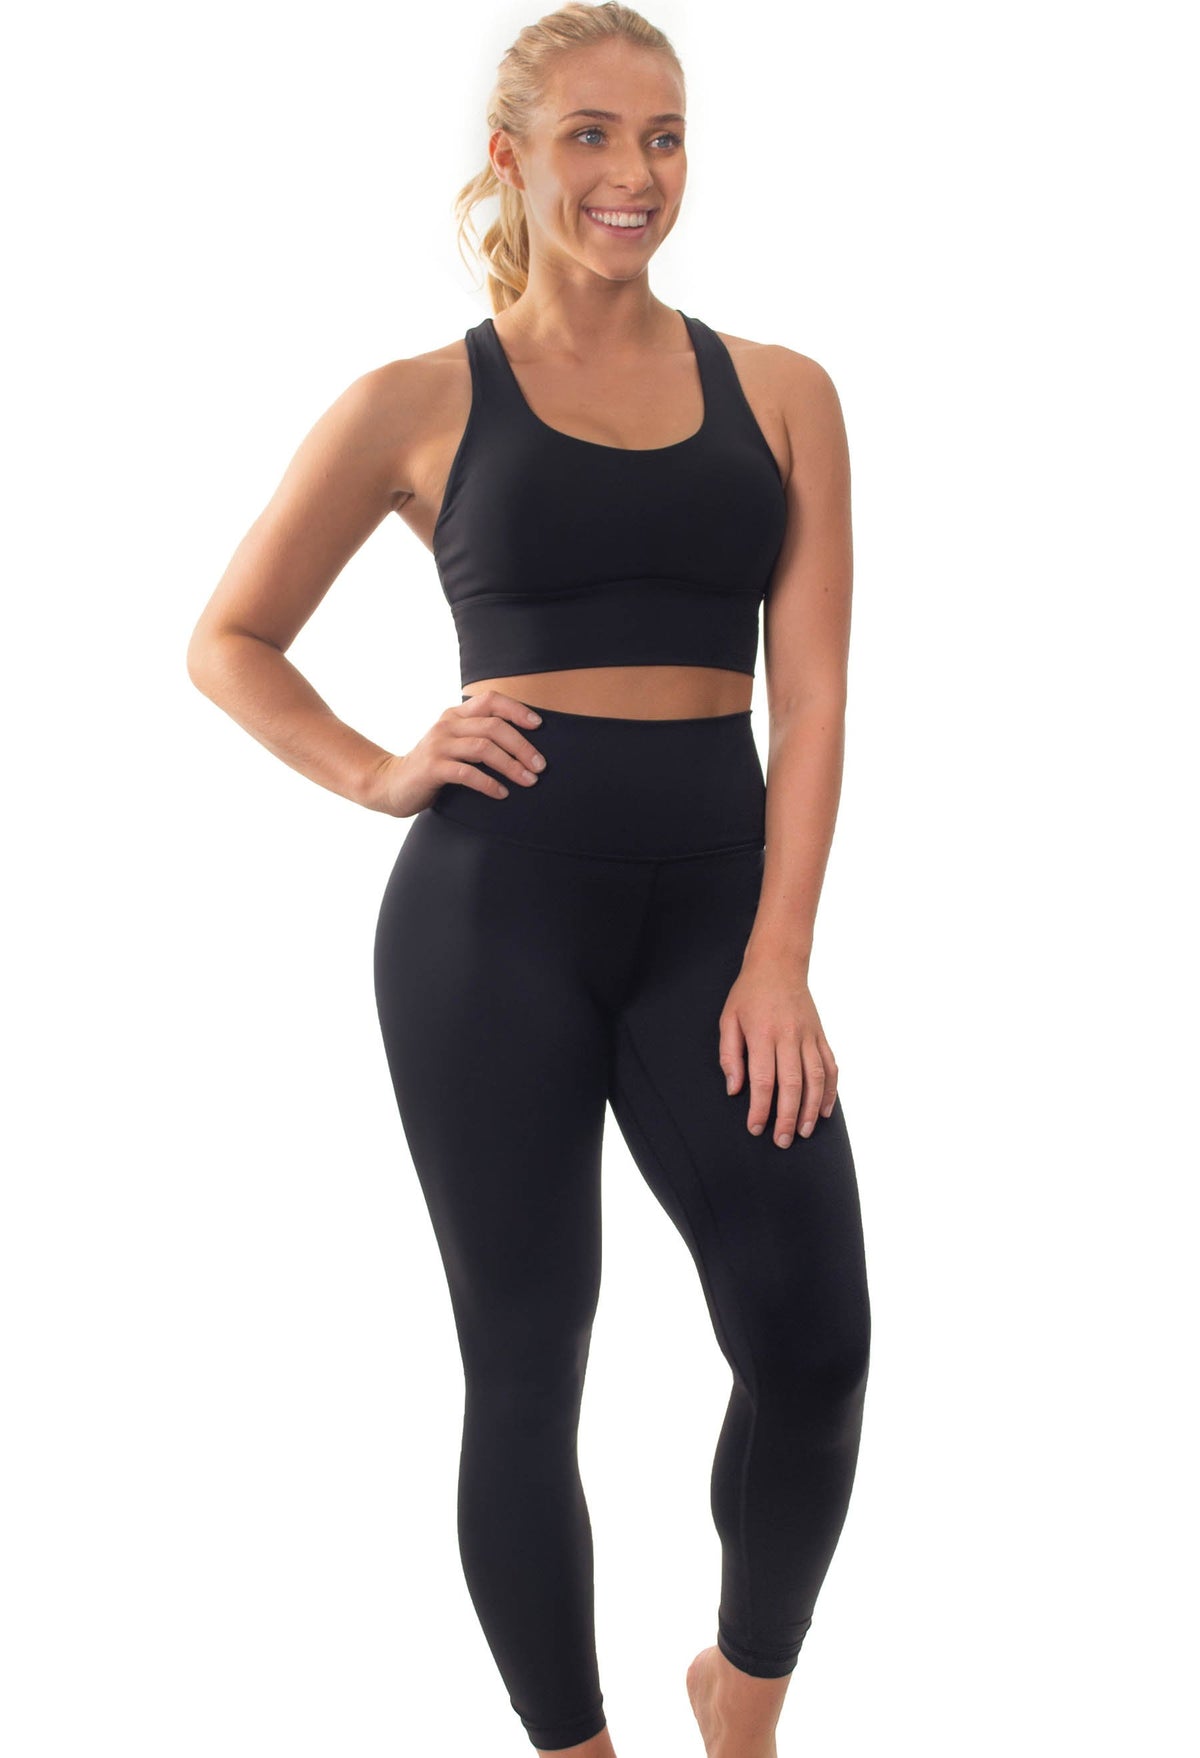 women's gymwear for high impact sports, yoga, pilates, weight lifting in black